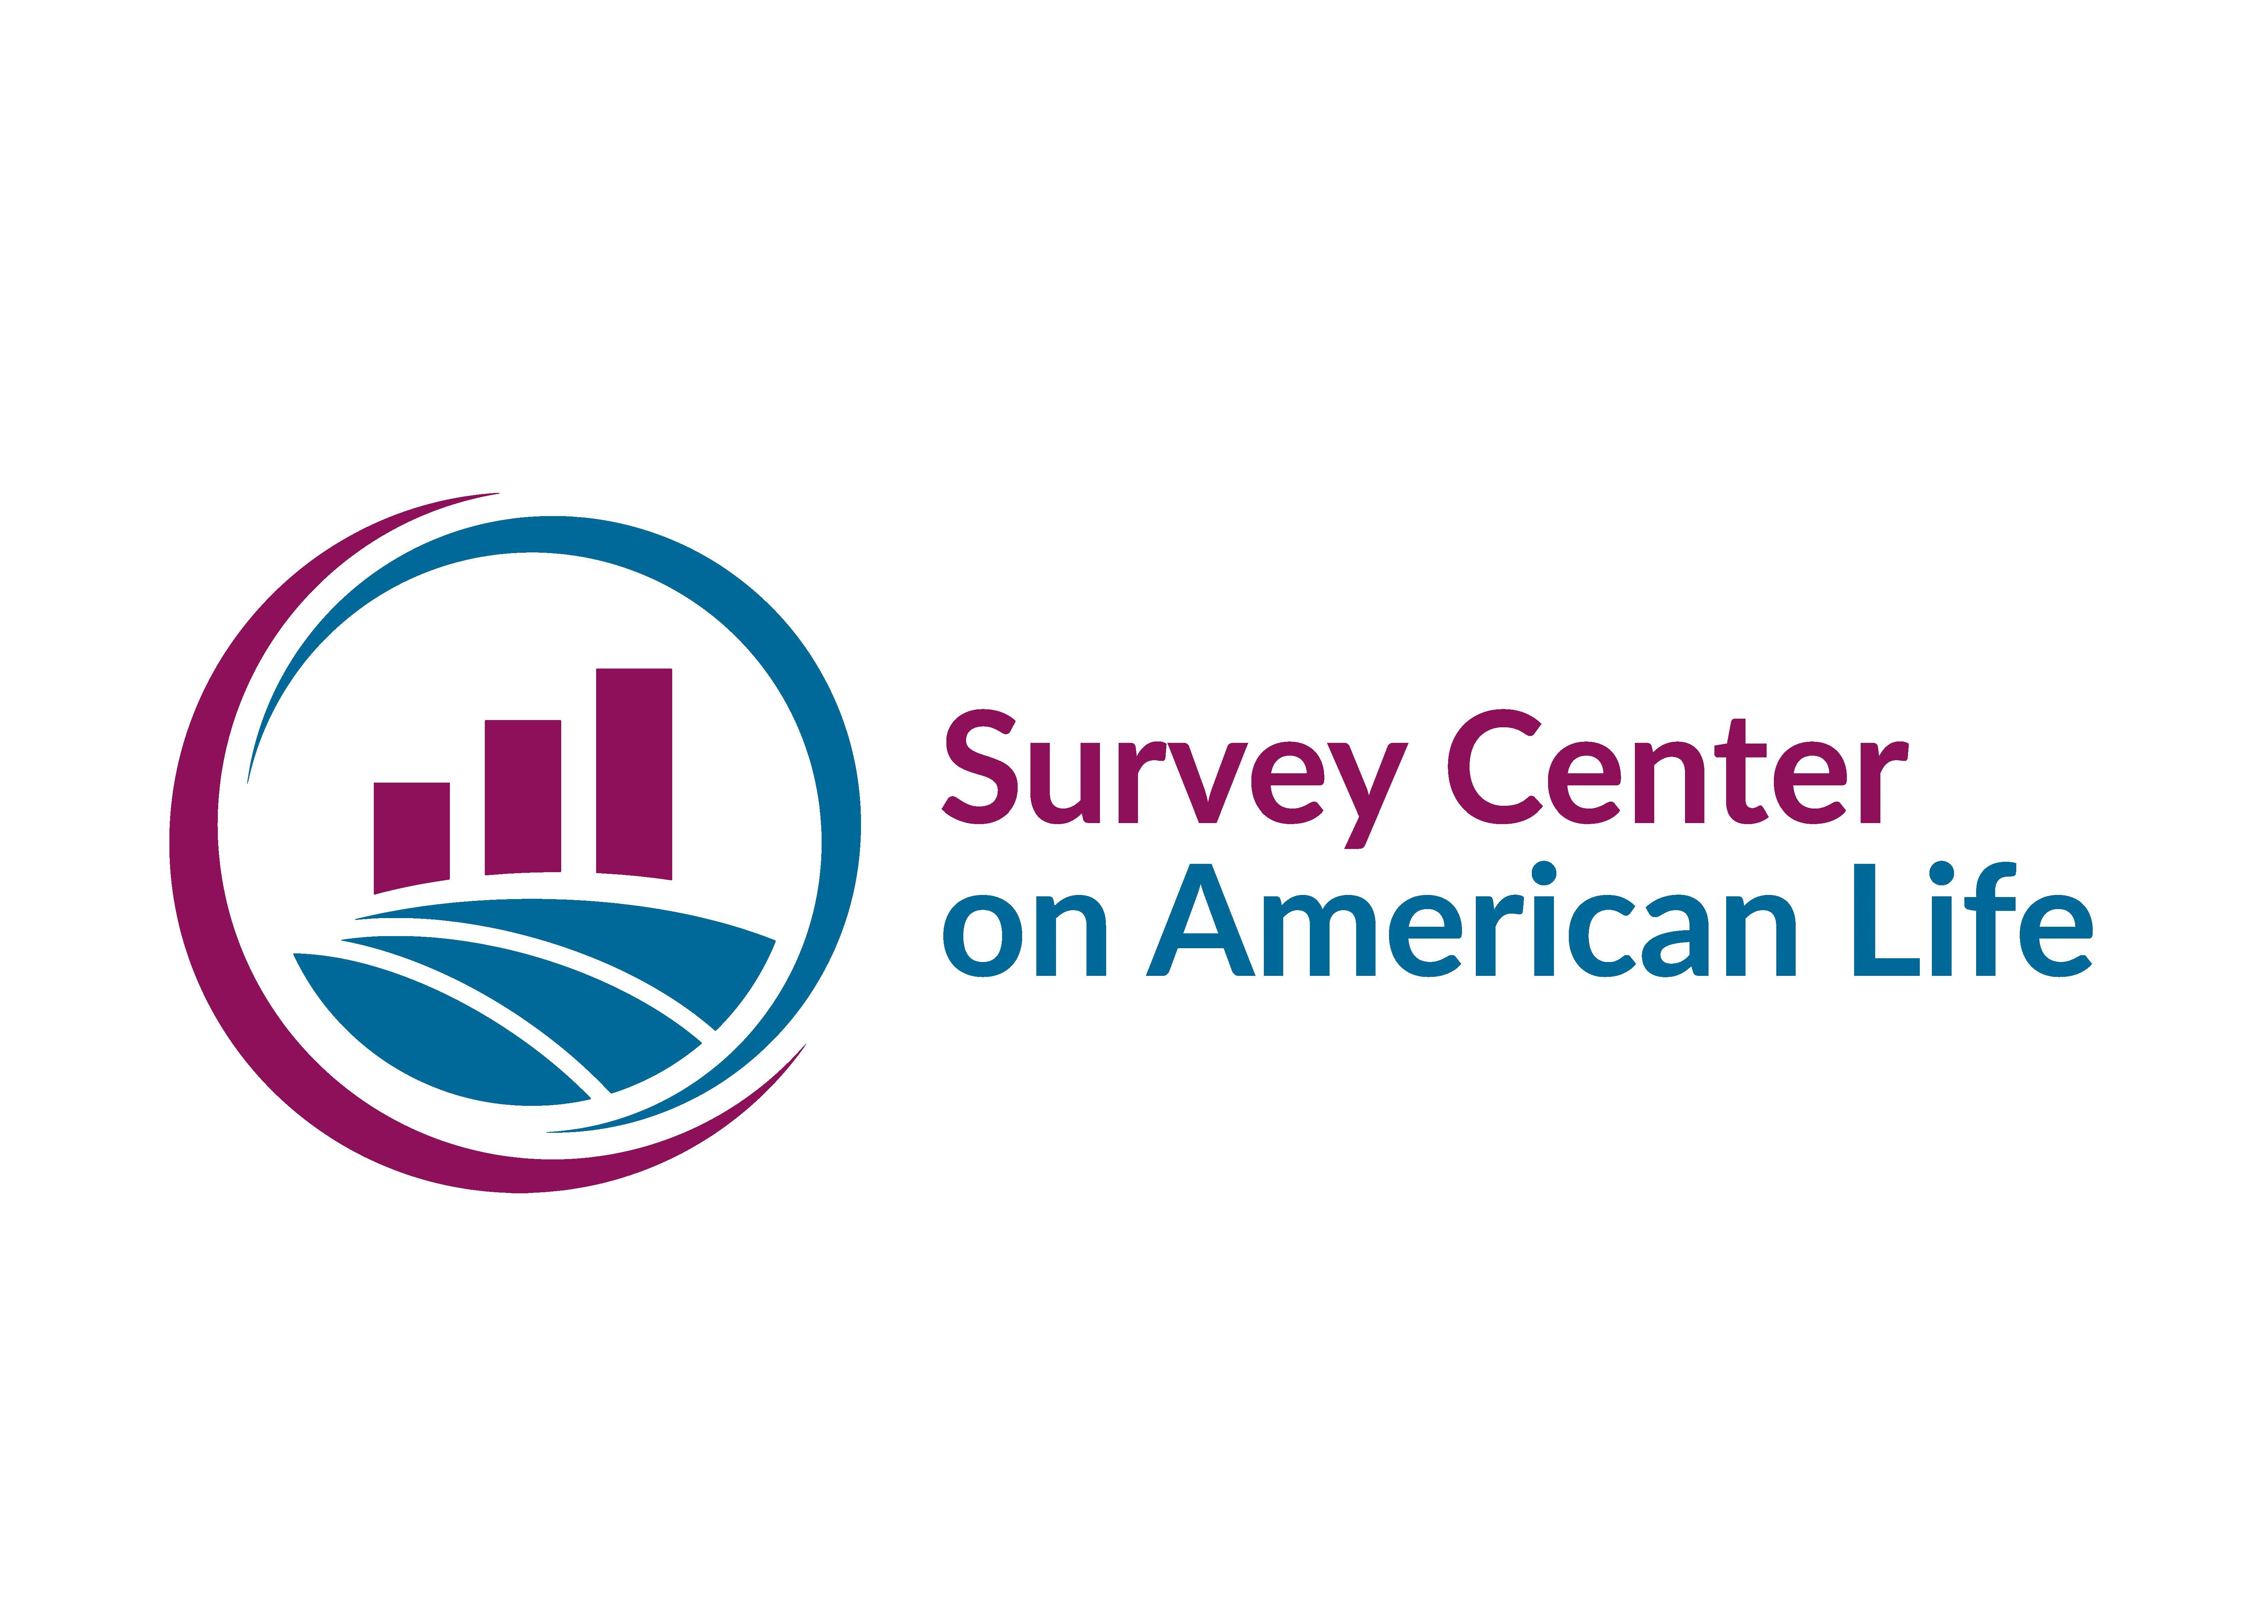 Survey Center on American Life logo